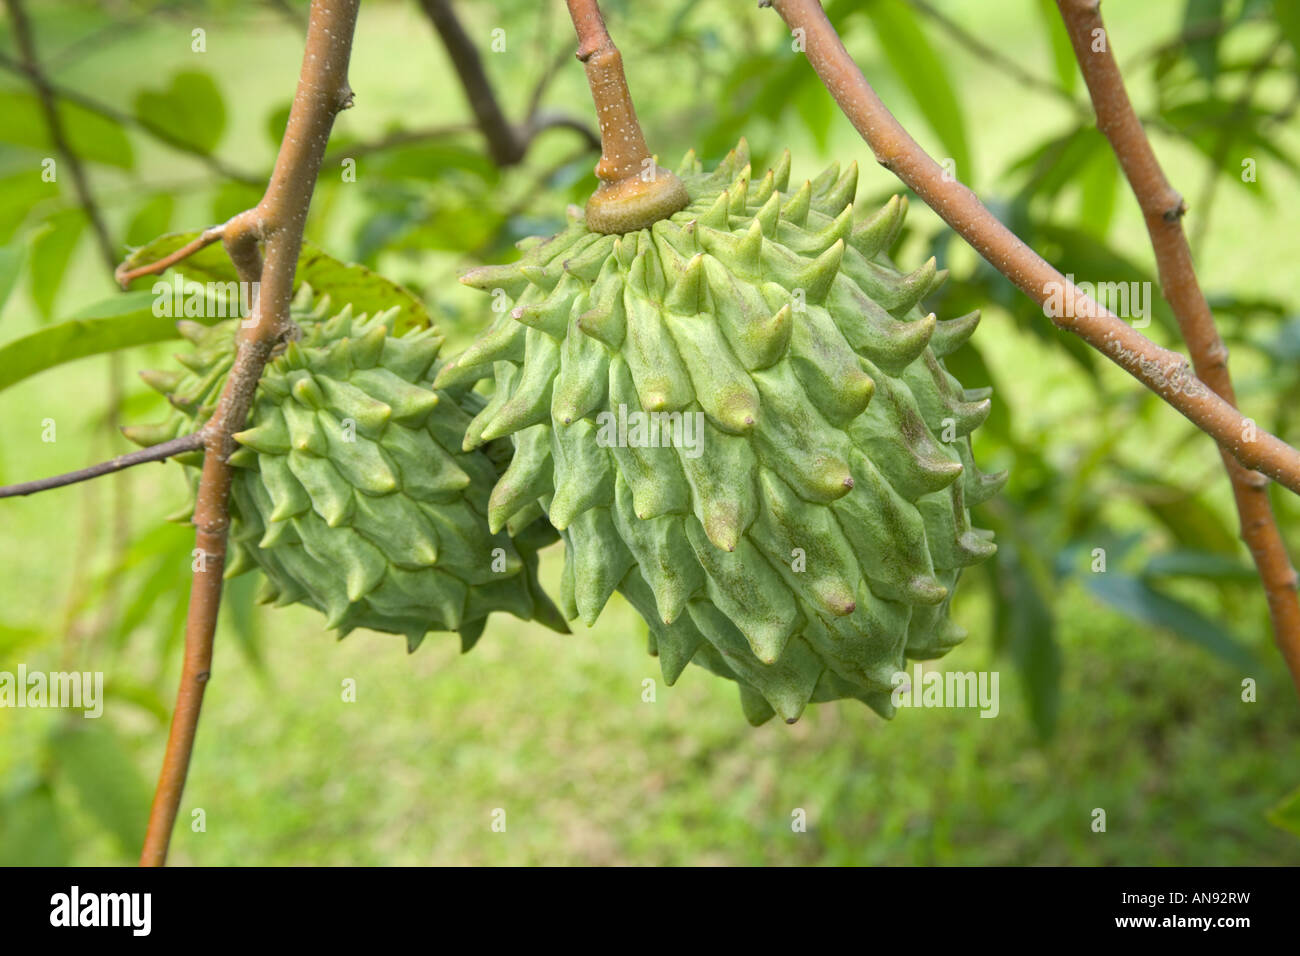 Maturing Rollinia fruit on branch. Stock Photo